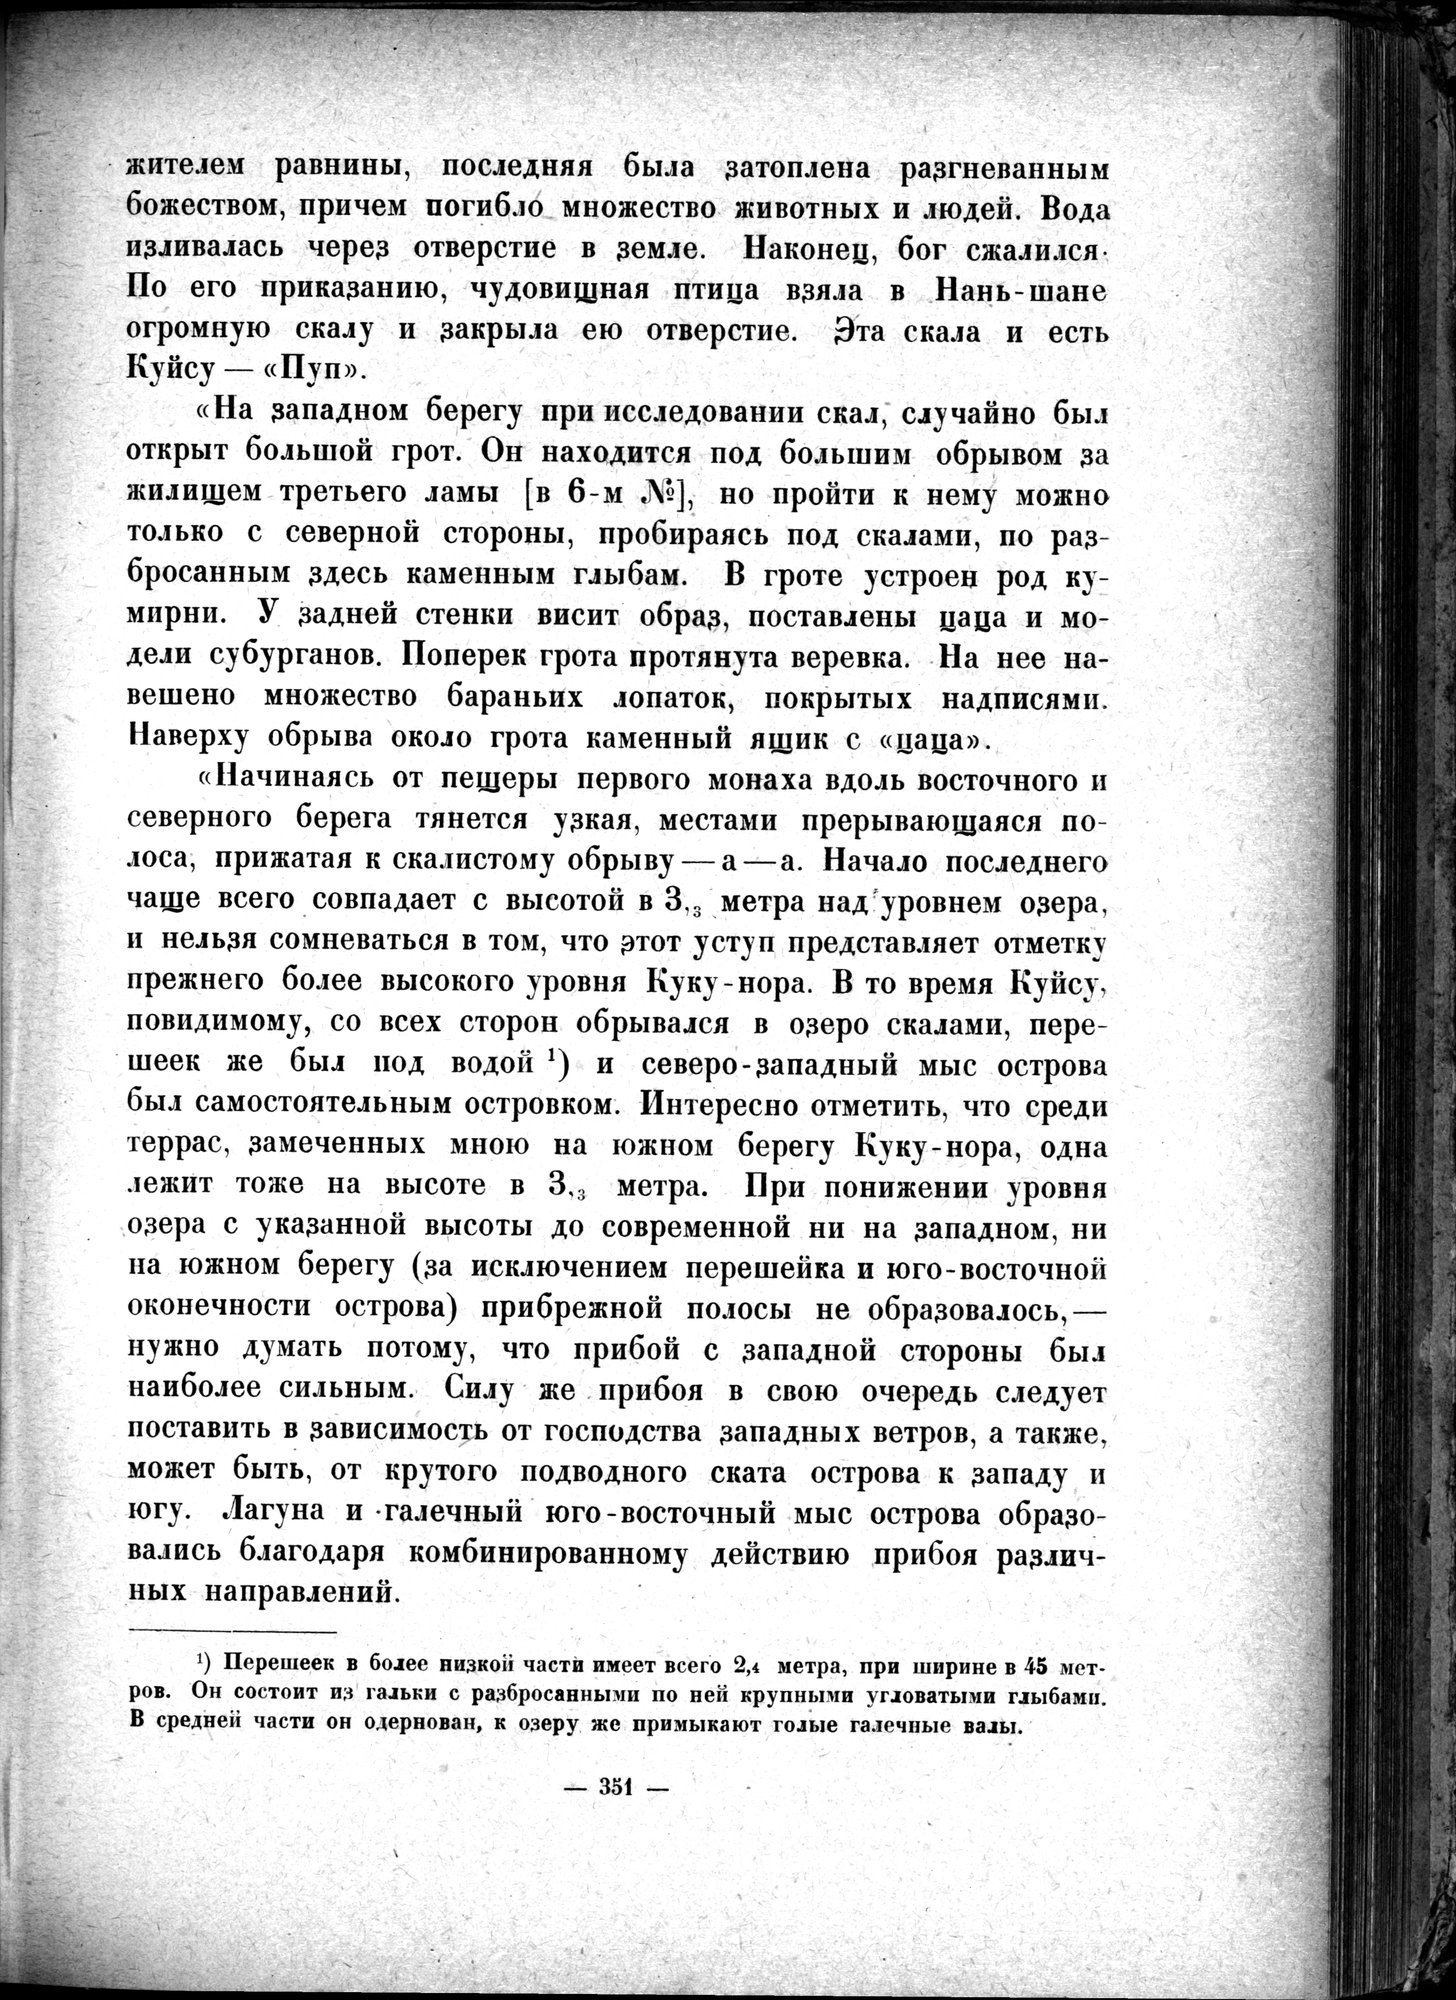 Mongoliya i Amdo i mertby gorod Khara-Khoto : vol.1 / Page 401 (Grayscale High Resolution Image)